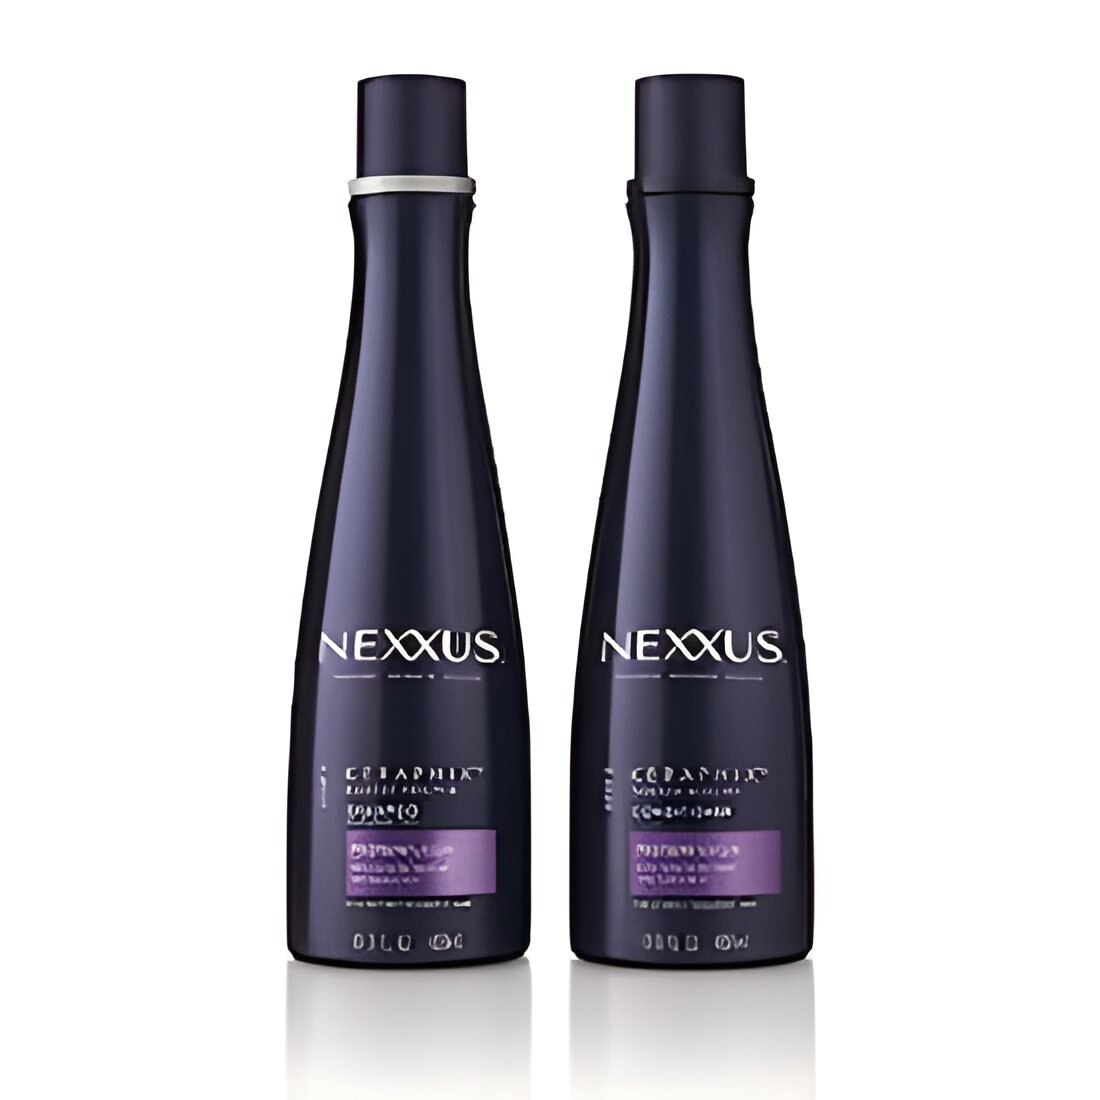 Free Nexxus Hair Care Samples